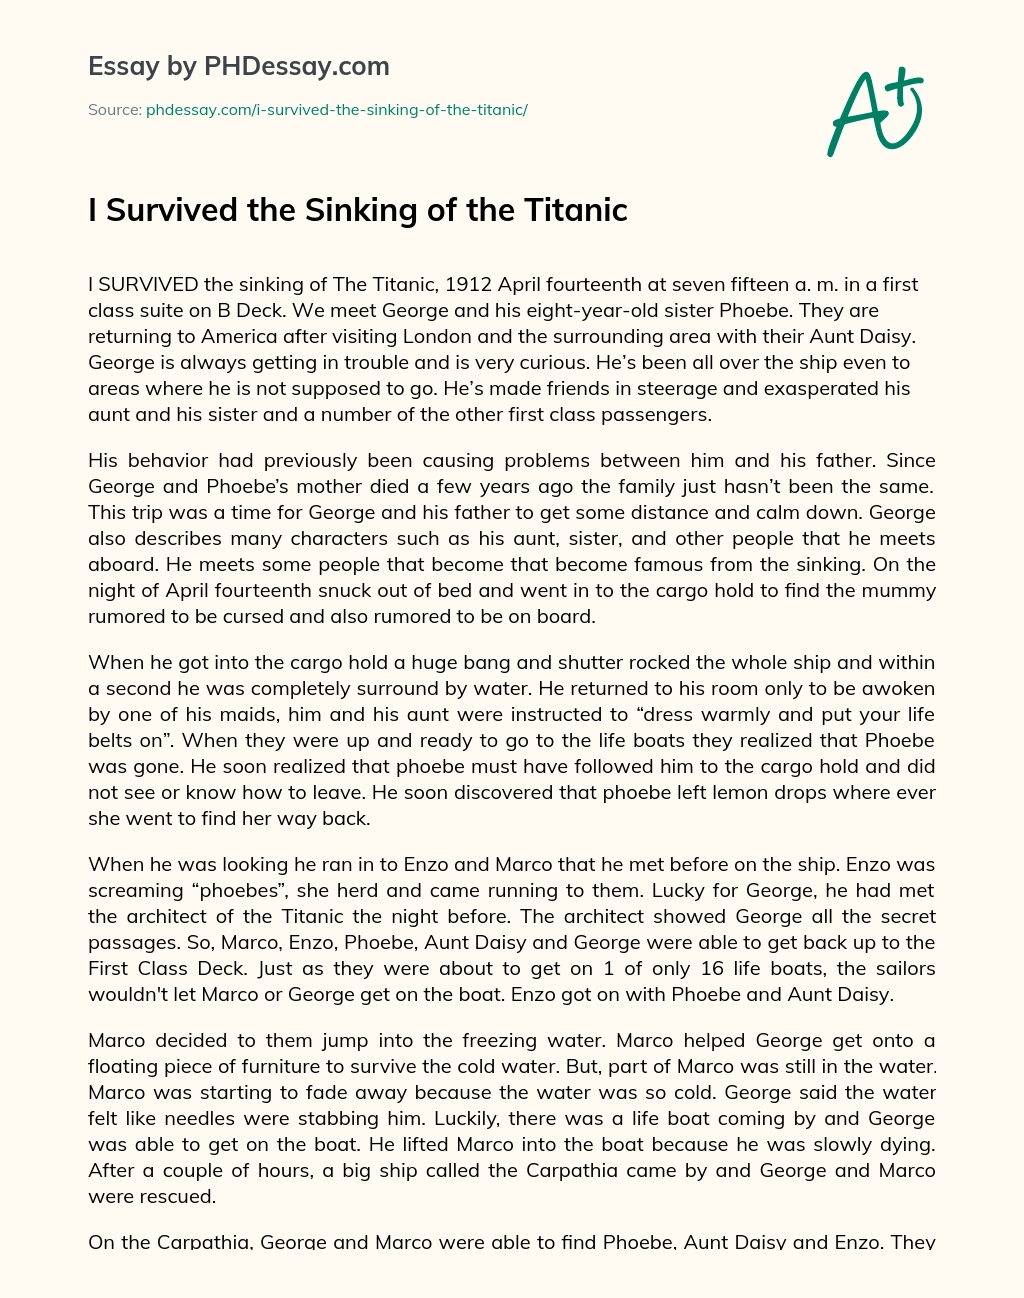 titanic summary essay 150 words